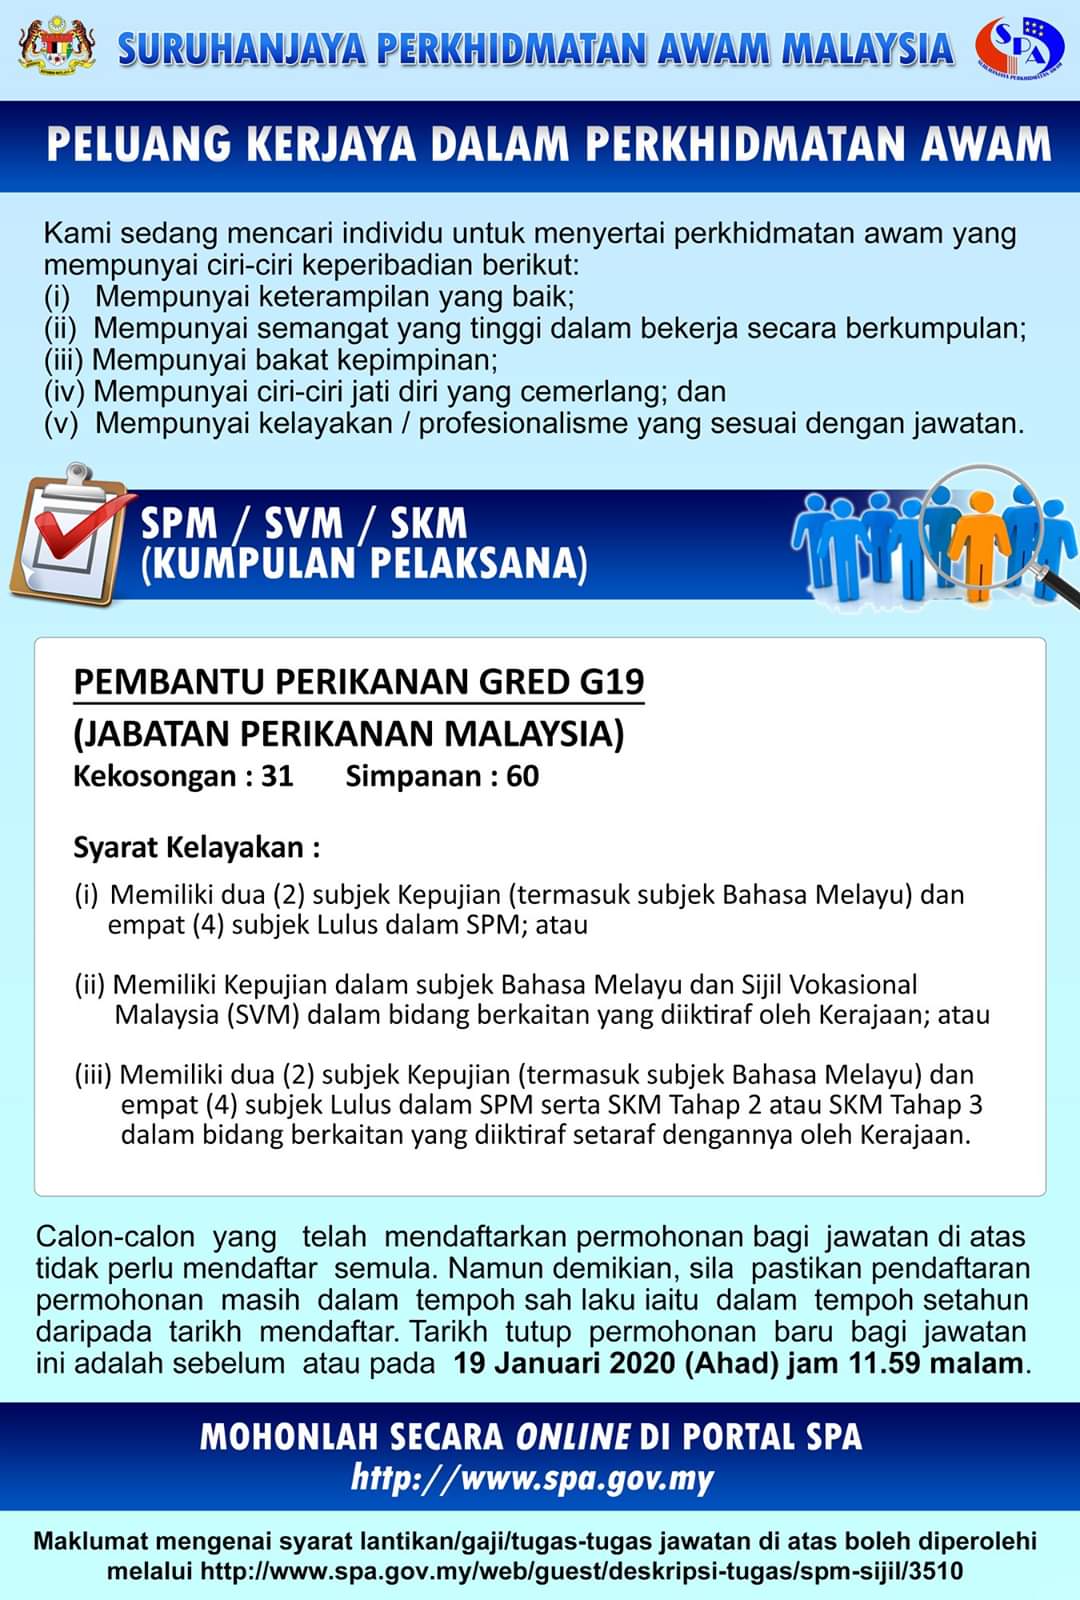 Jawatan Kosong Jabatan Perikanan Malaysia 2020 - SUMBER 